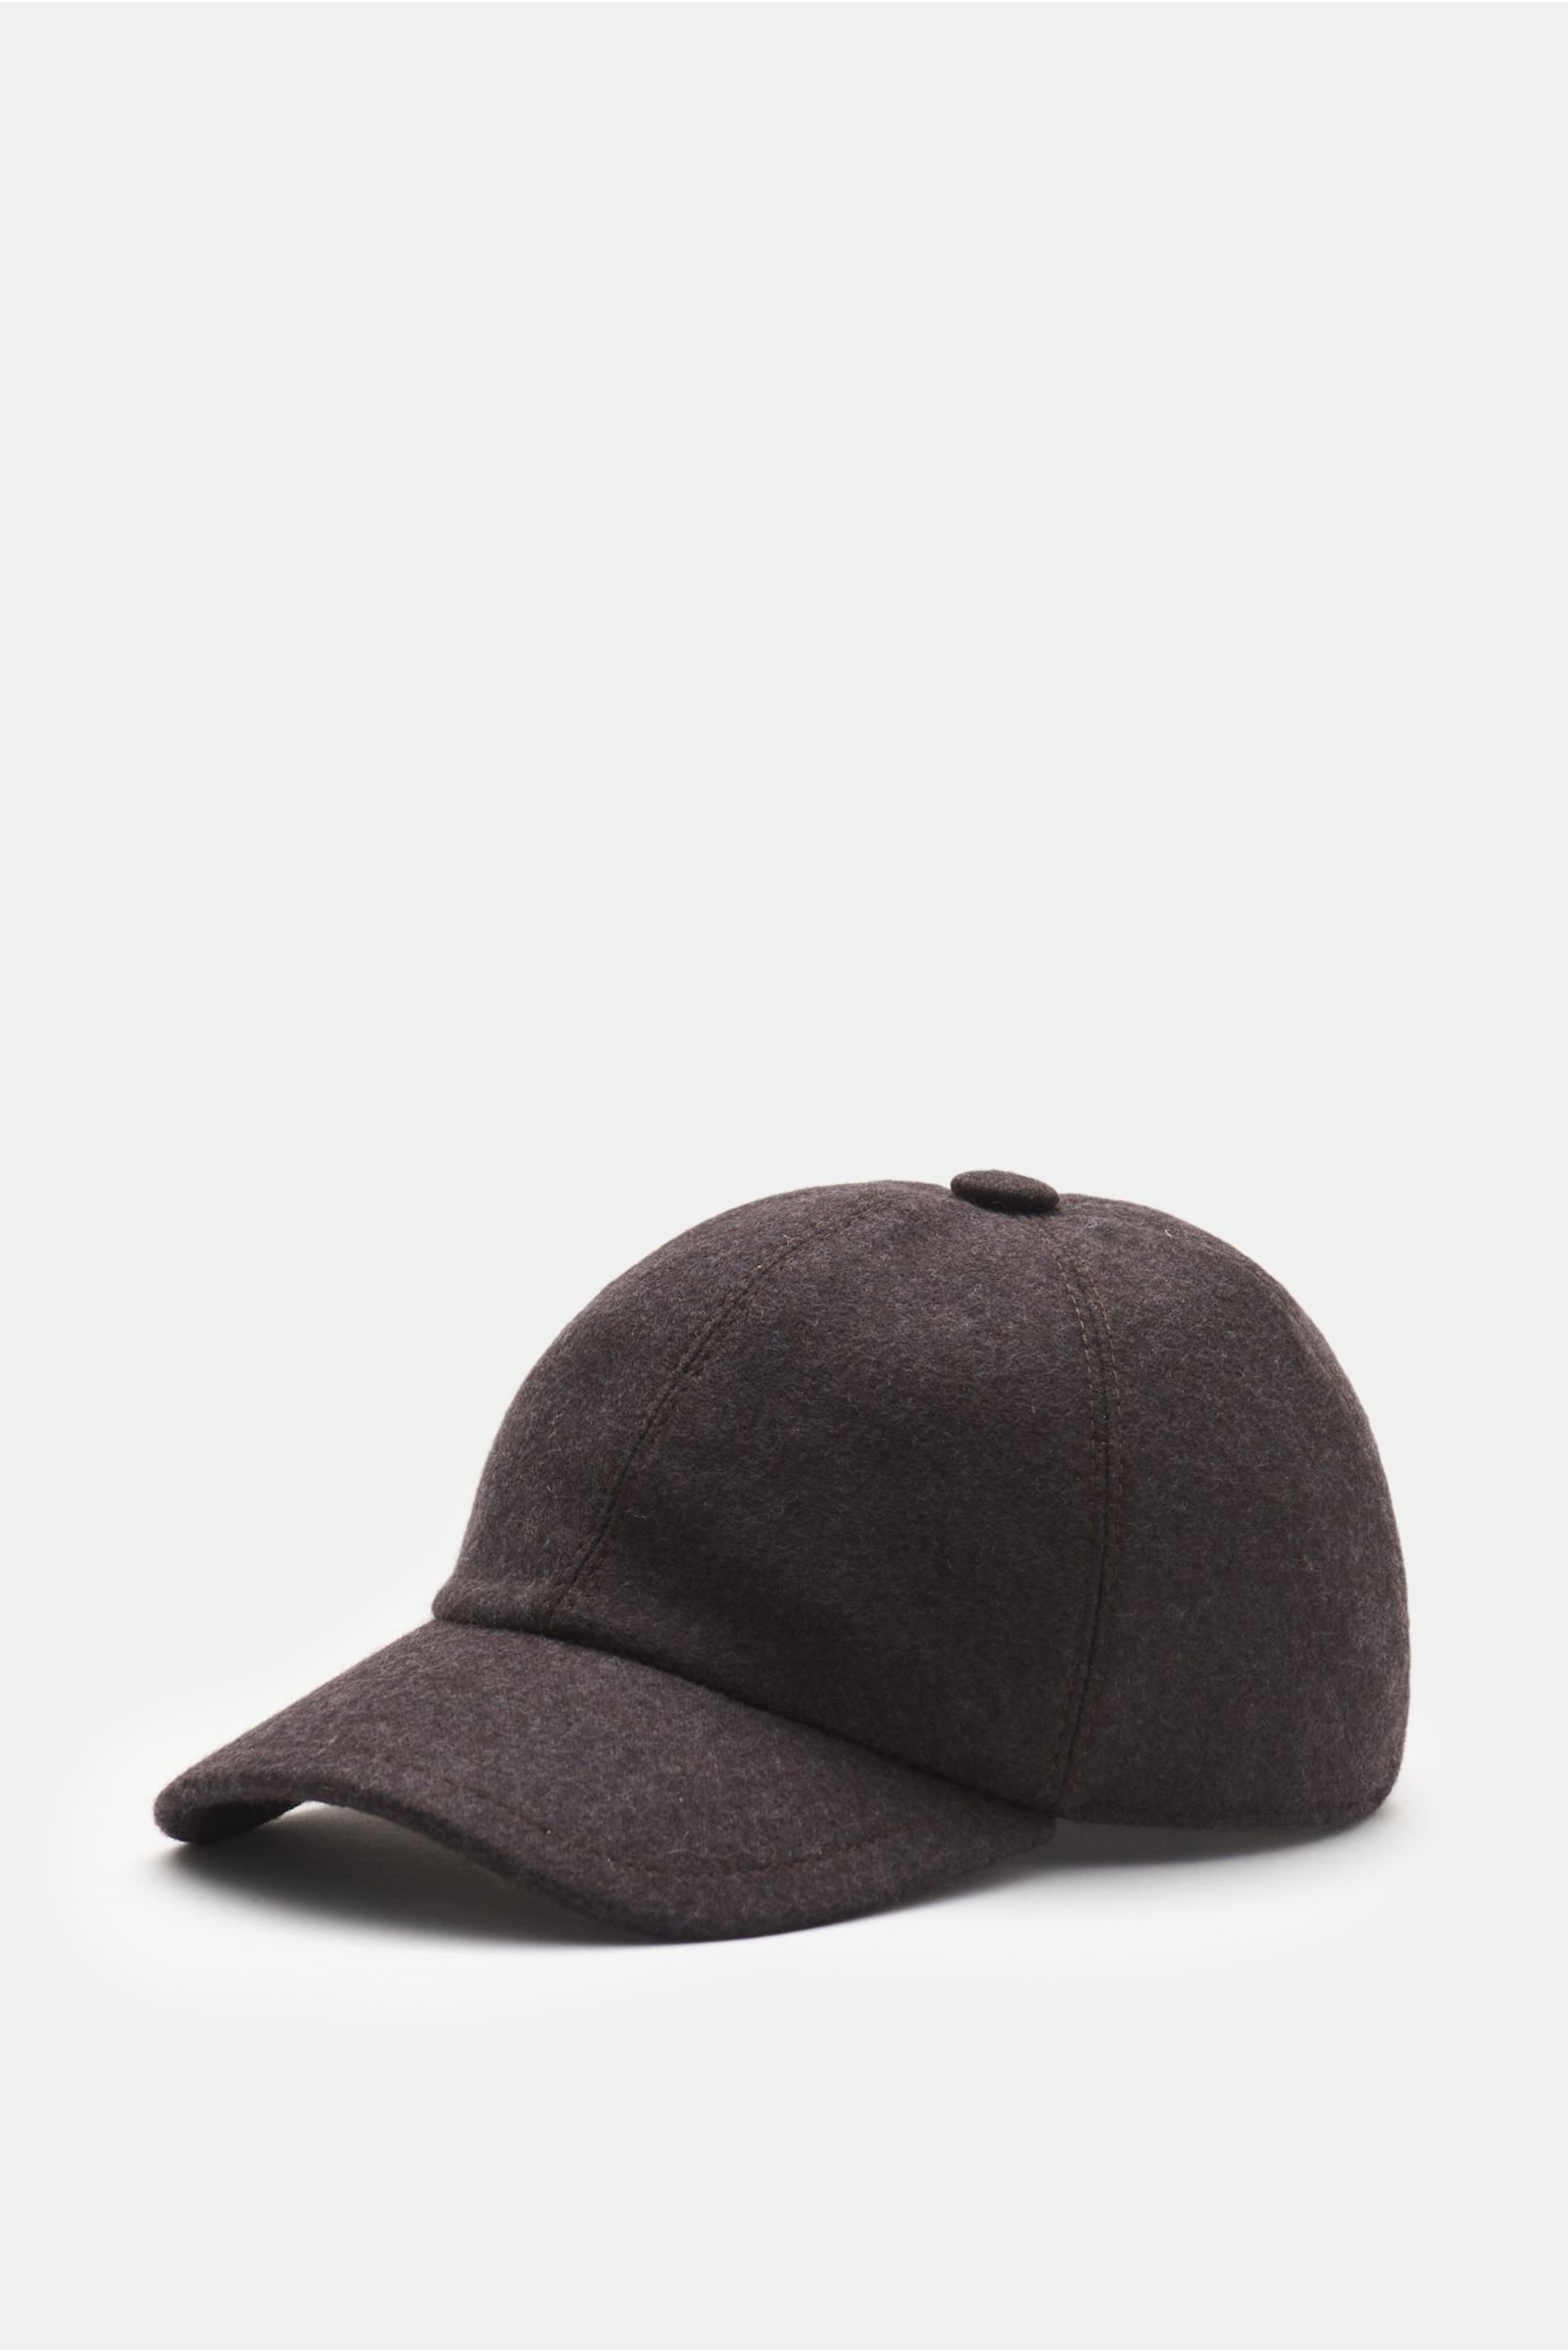 Cashmere baseball cap dark brown